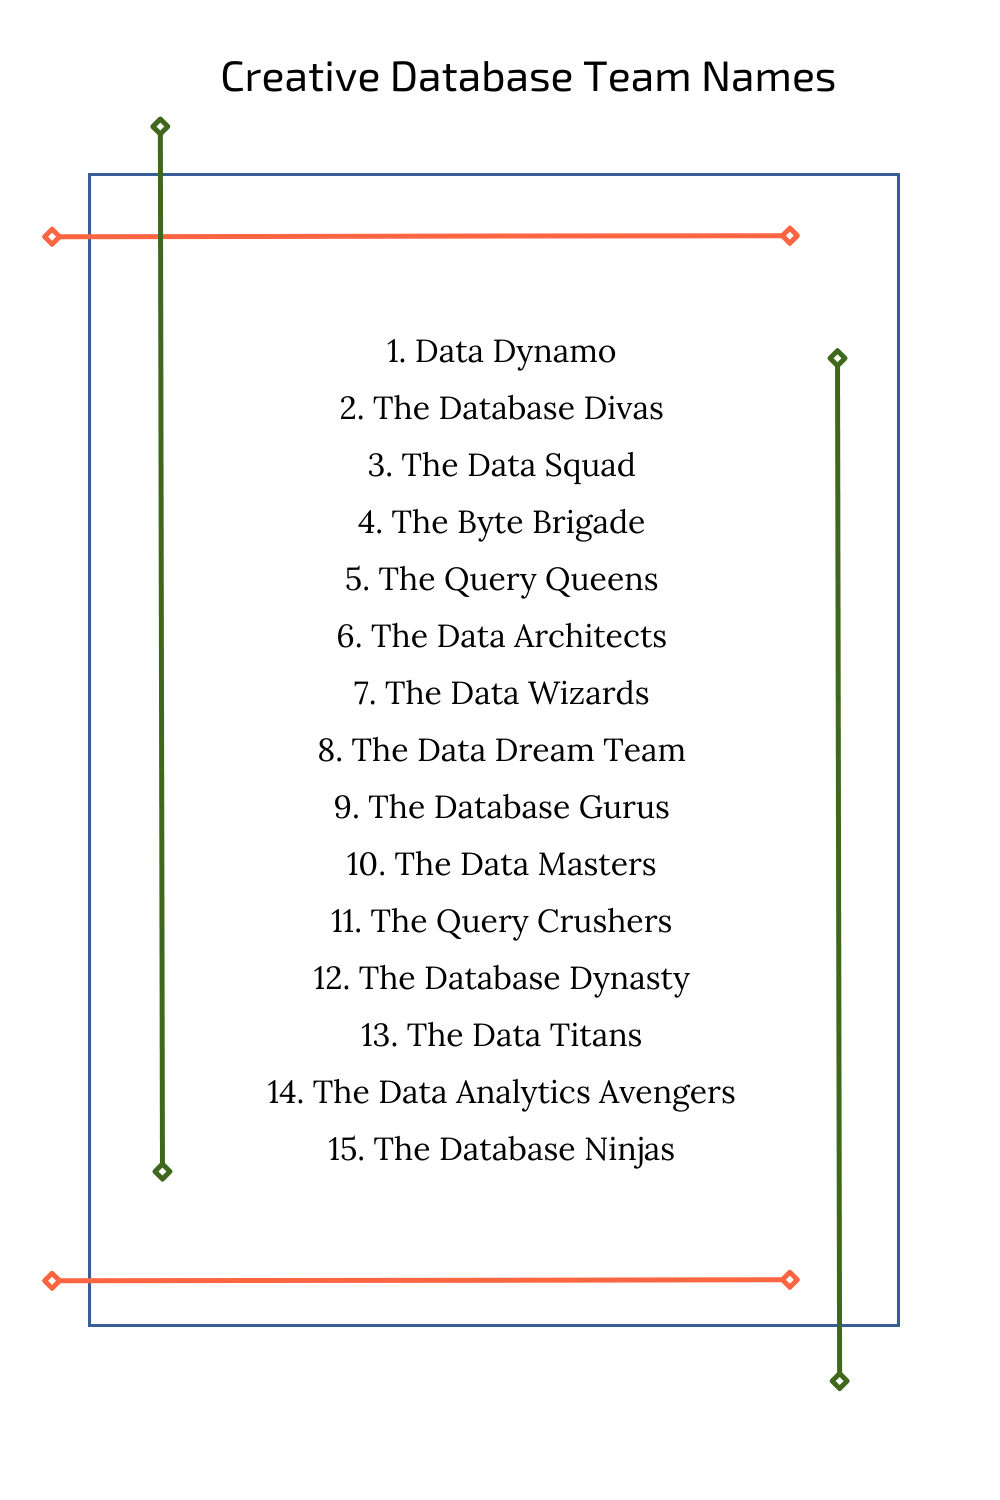 Creative Database Team Names